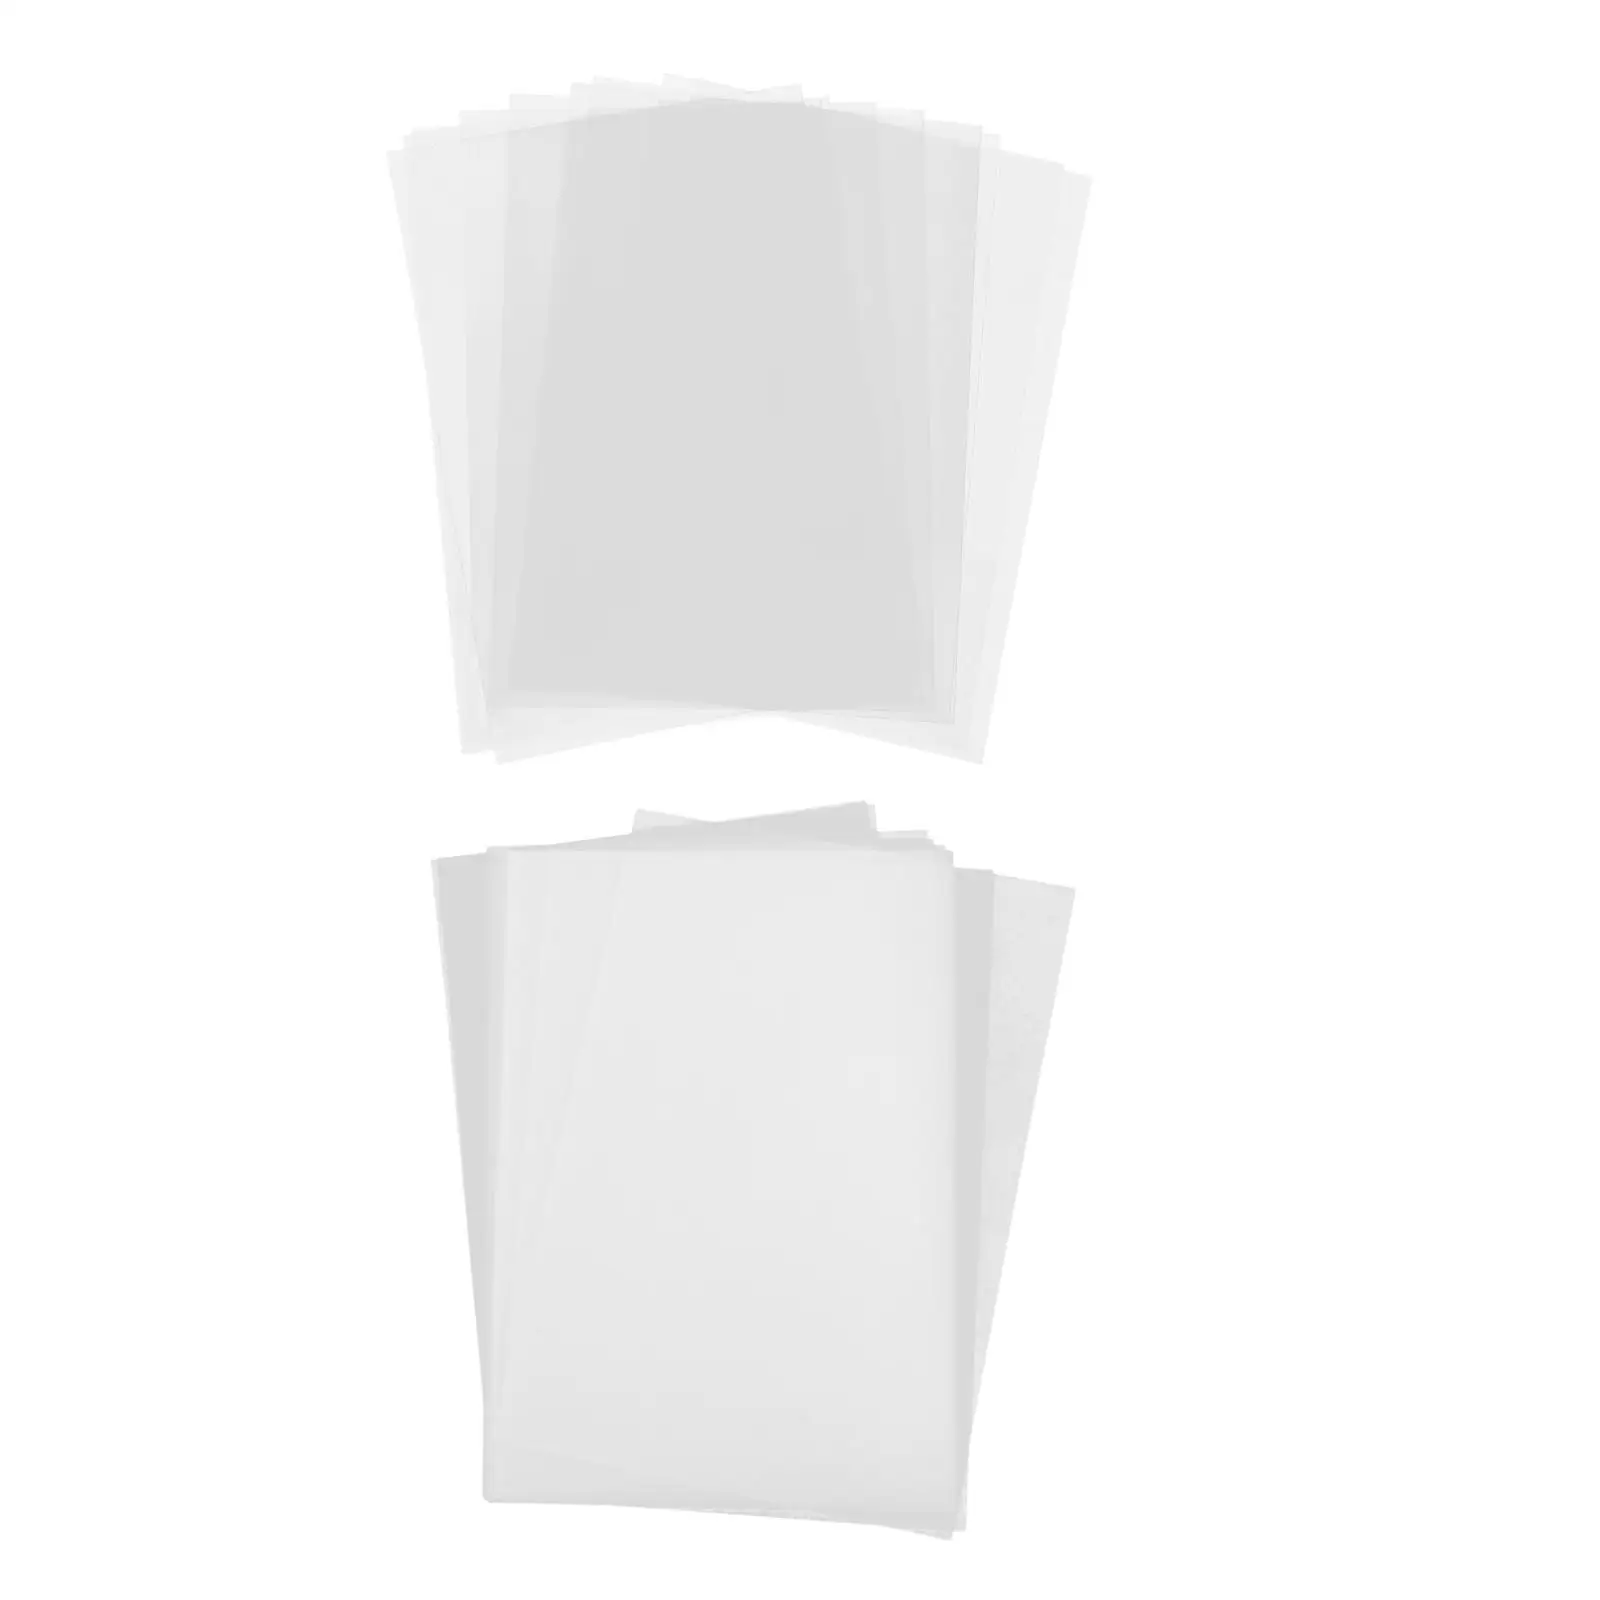 10x Heat Shrink Sheets DIY Blank Shrink Film Paper Card Making